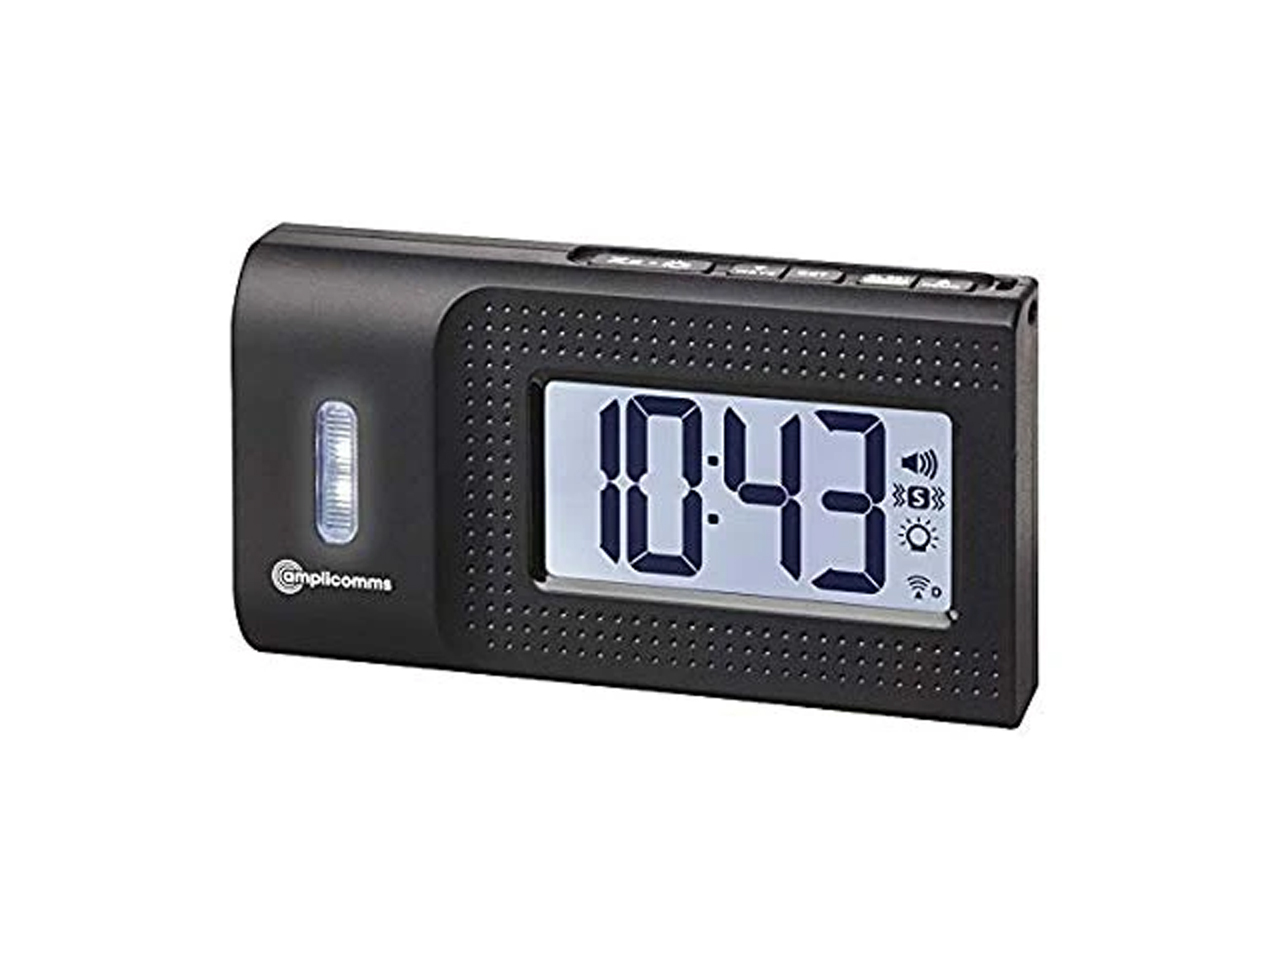 Amplicomms TCL 250 Alarm Clock Travel